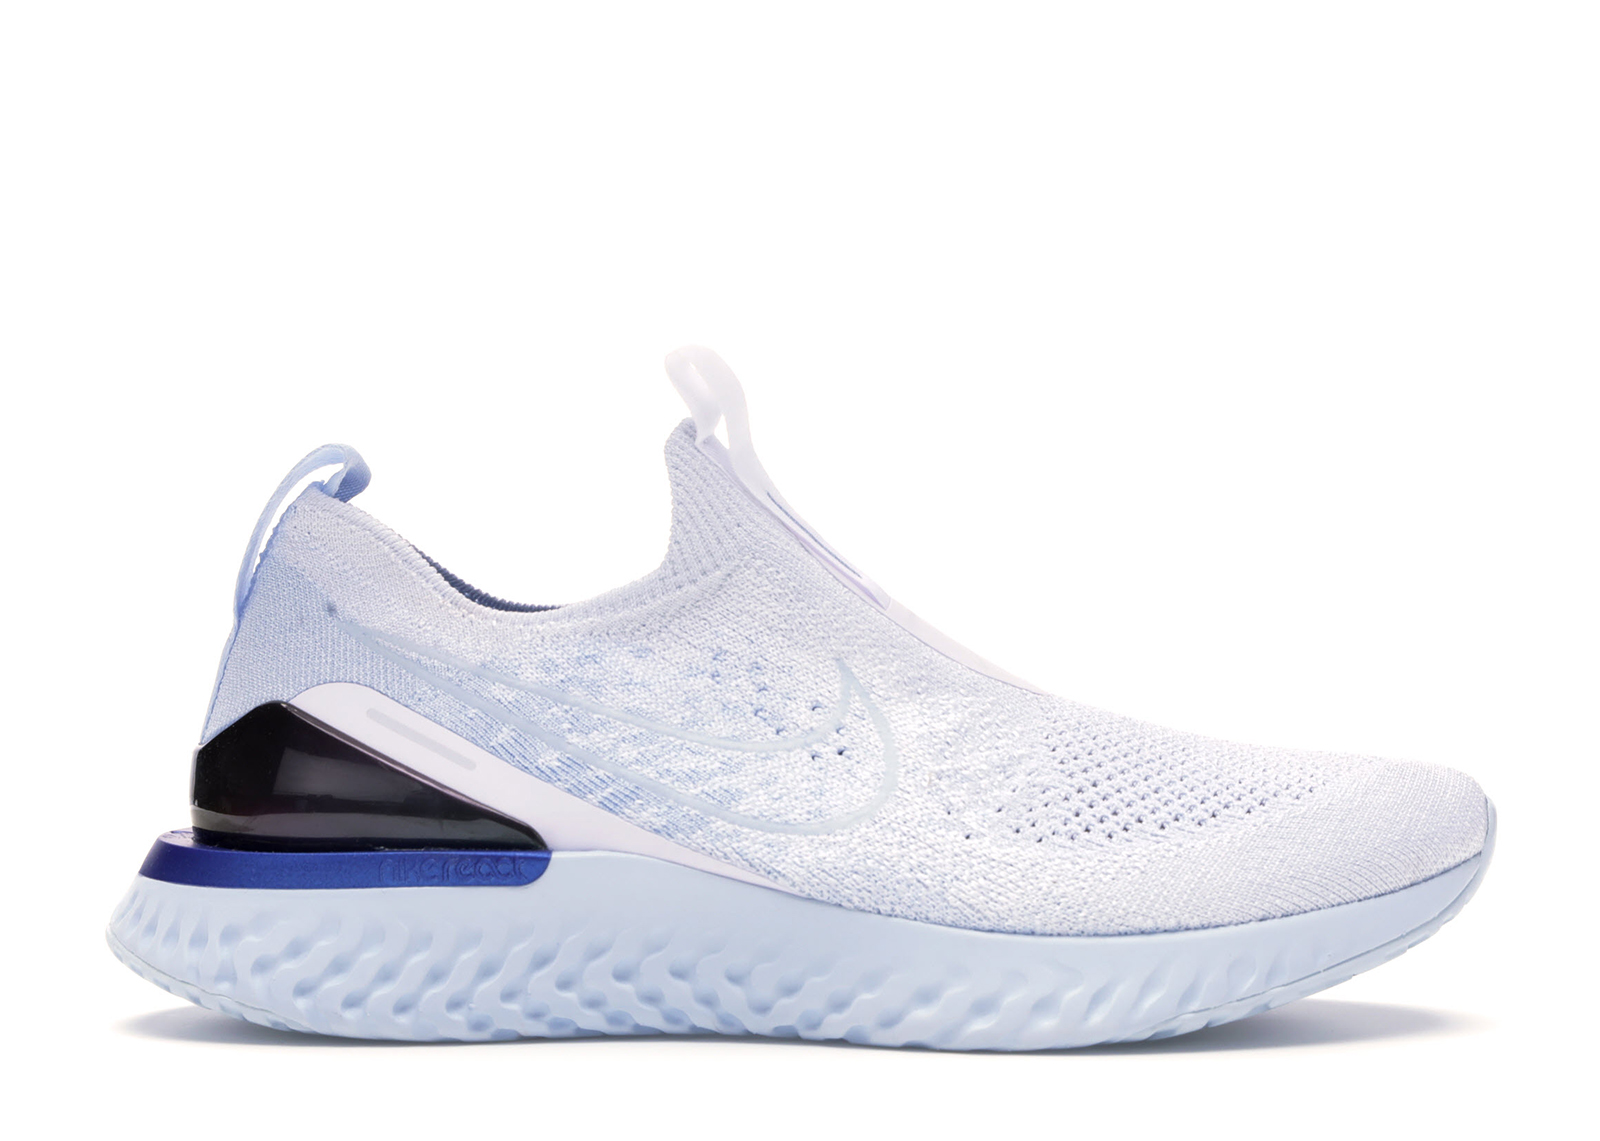 Nike ナイキ レディース White US_6W(23cm) サイズ スニーカー (Women's) Hydrogen Blue 